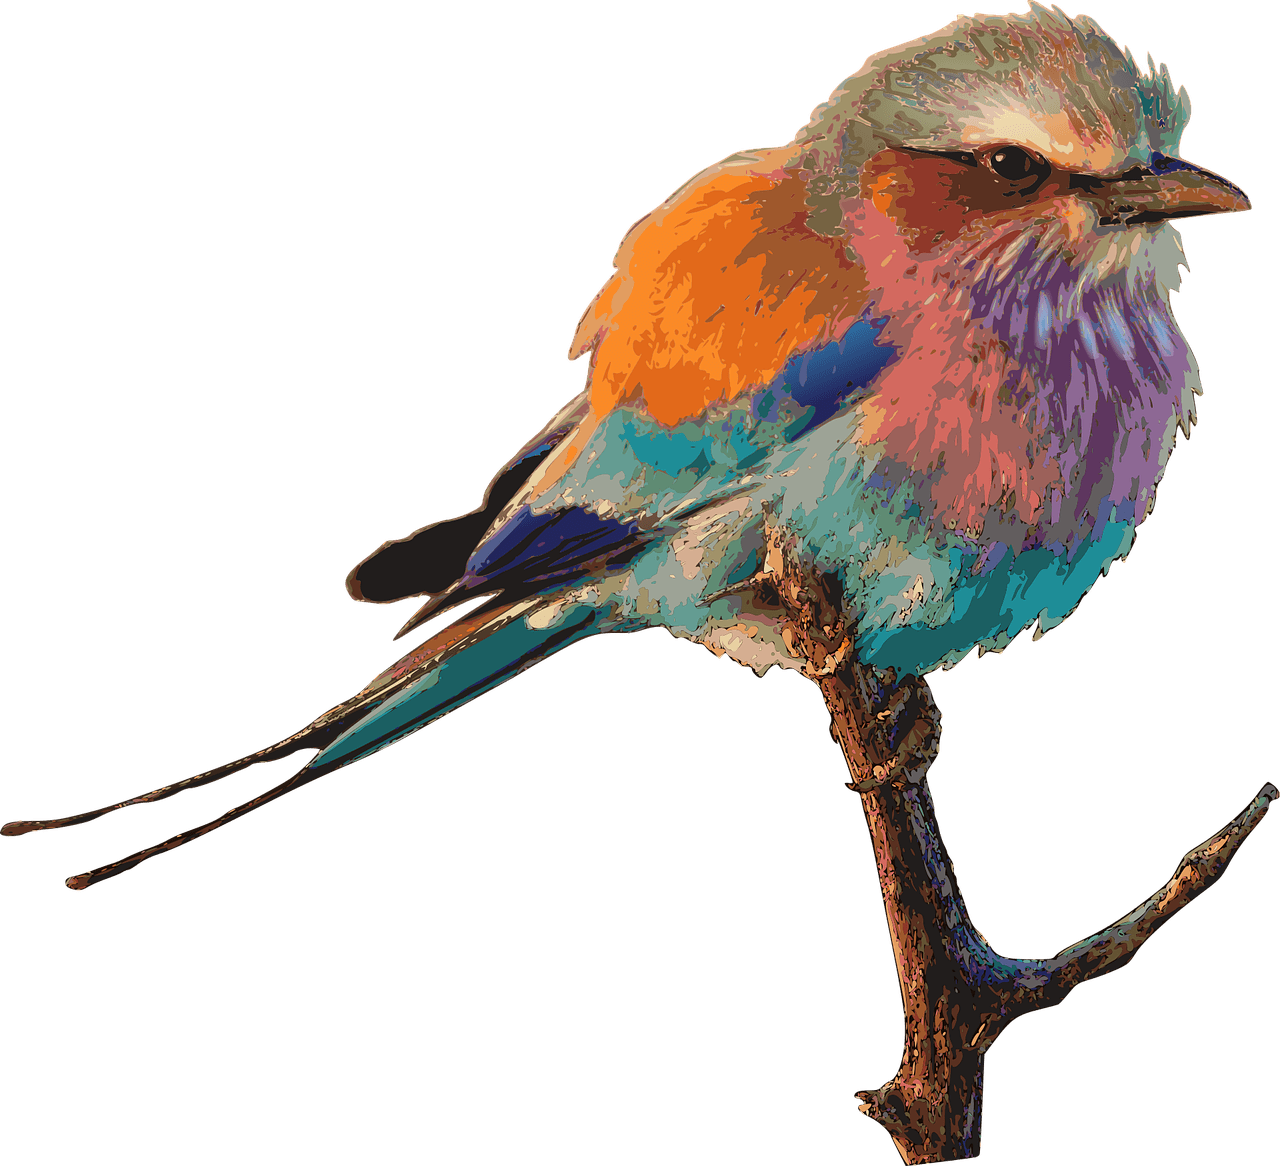 Image of a bird